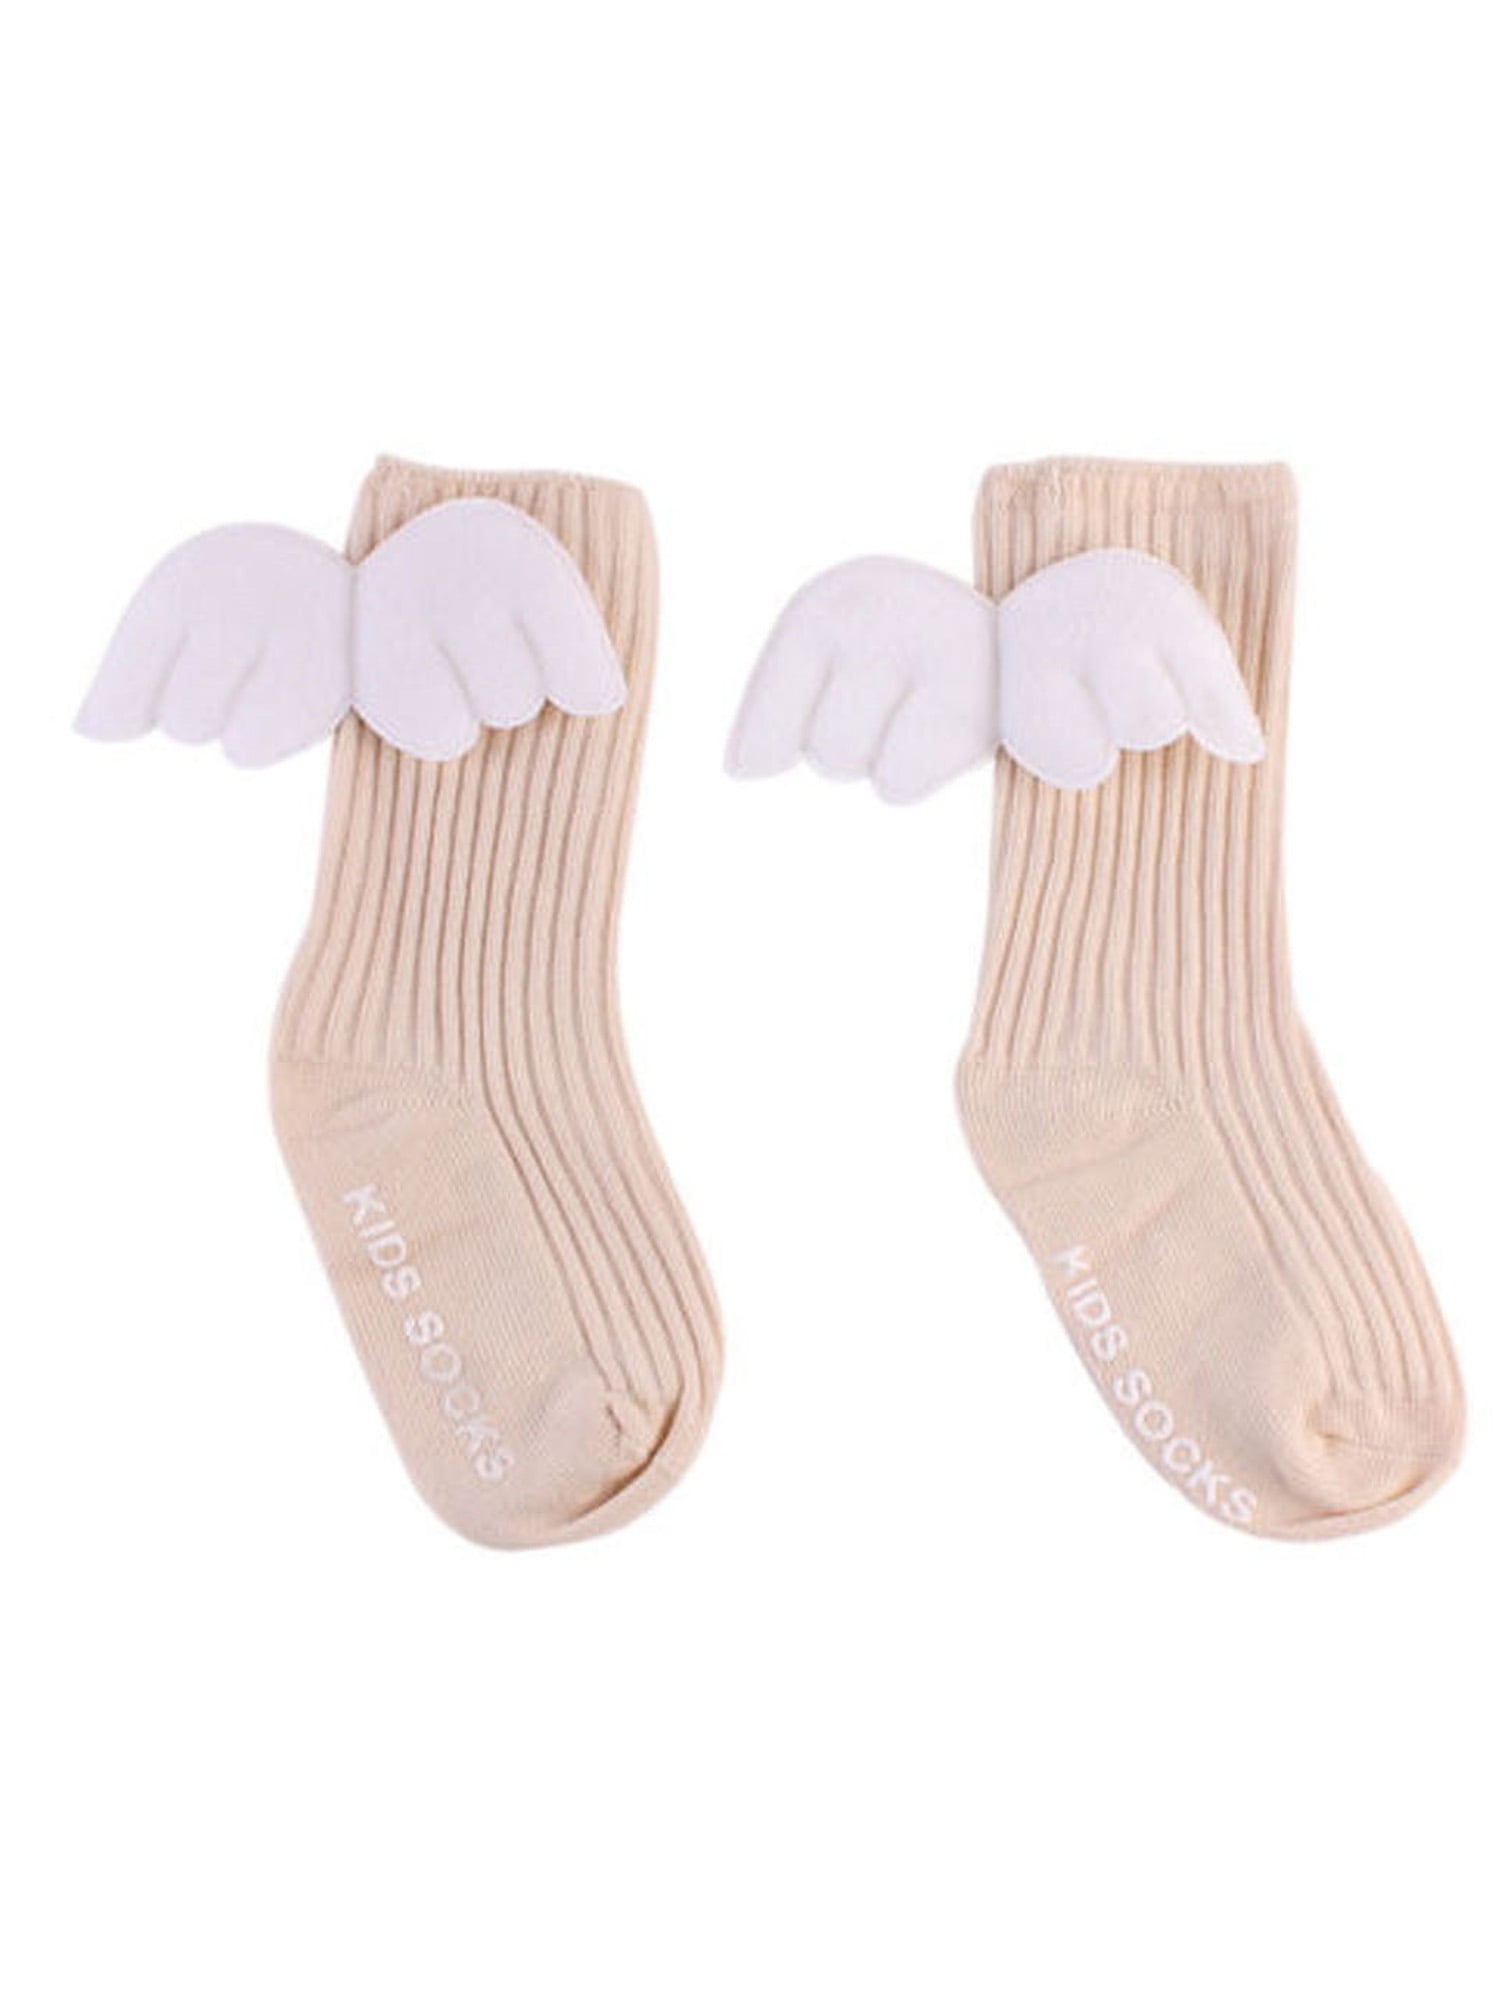 Toddler Cotton Kids Baby Knitted Soft Angel Wings Socks Leg Warmer Knee High 